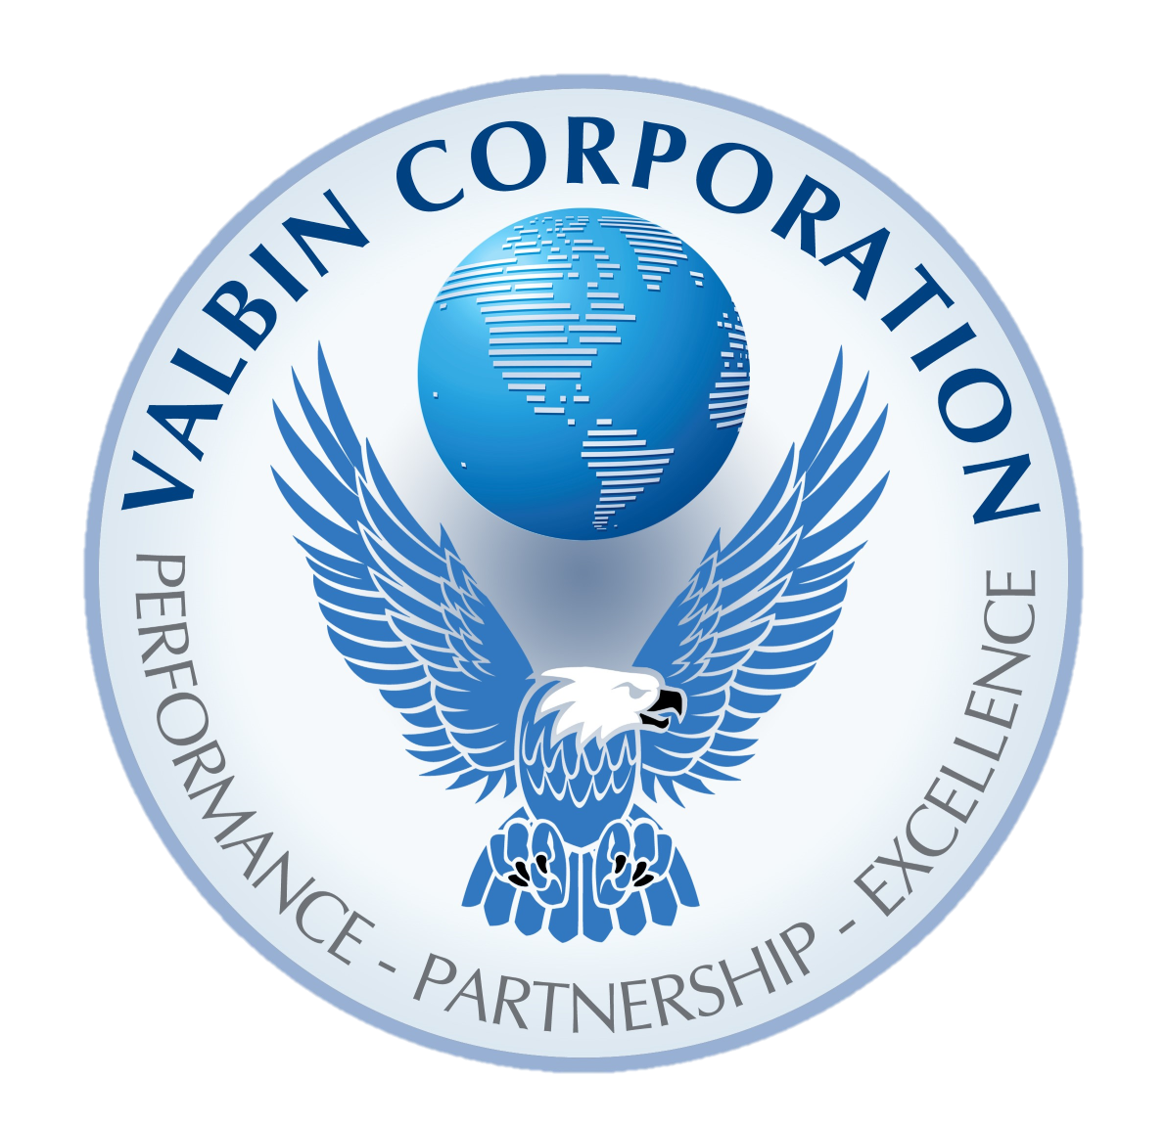 Valbin Corporation